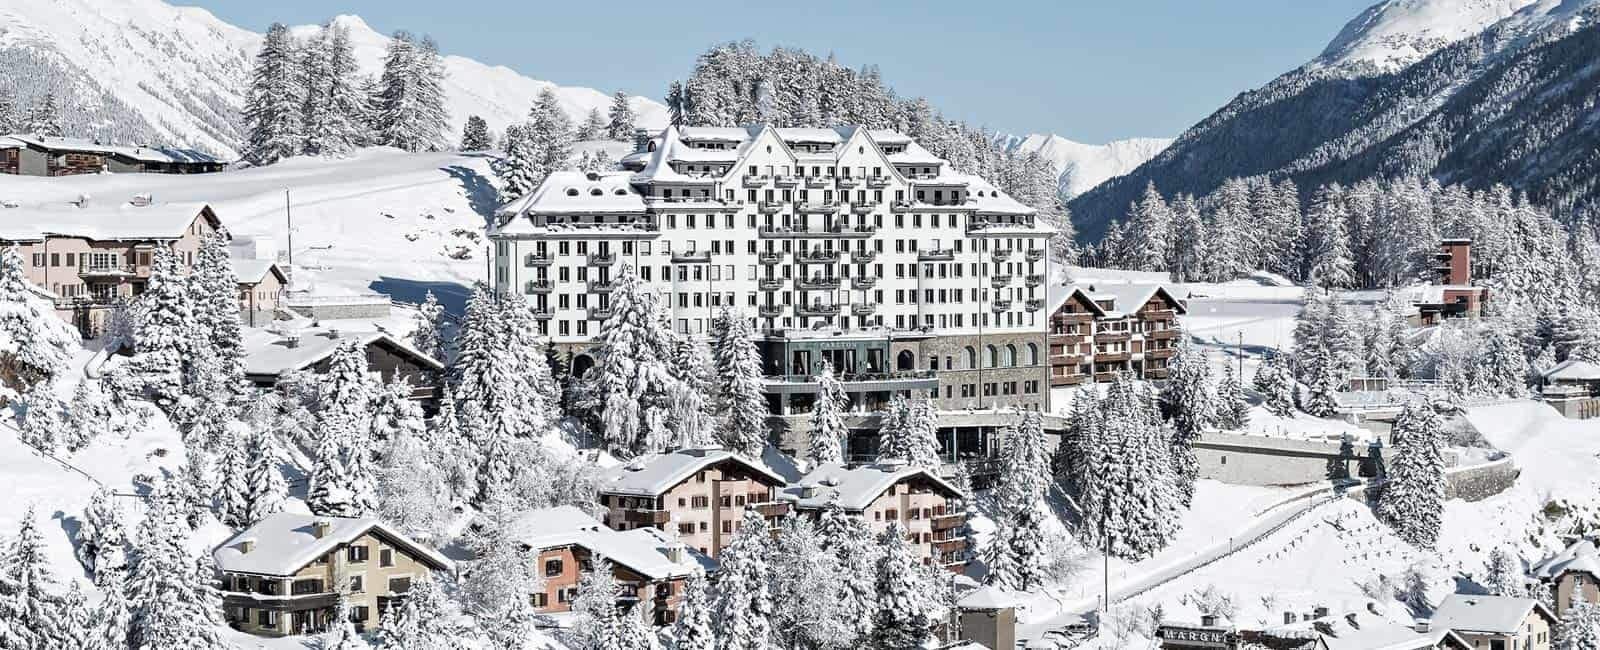 St. Moritz Carlton hotel- overview